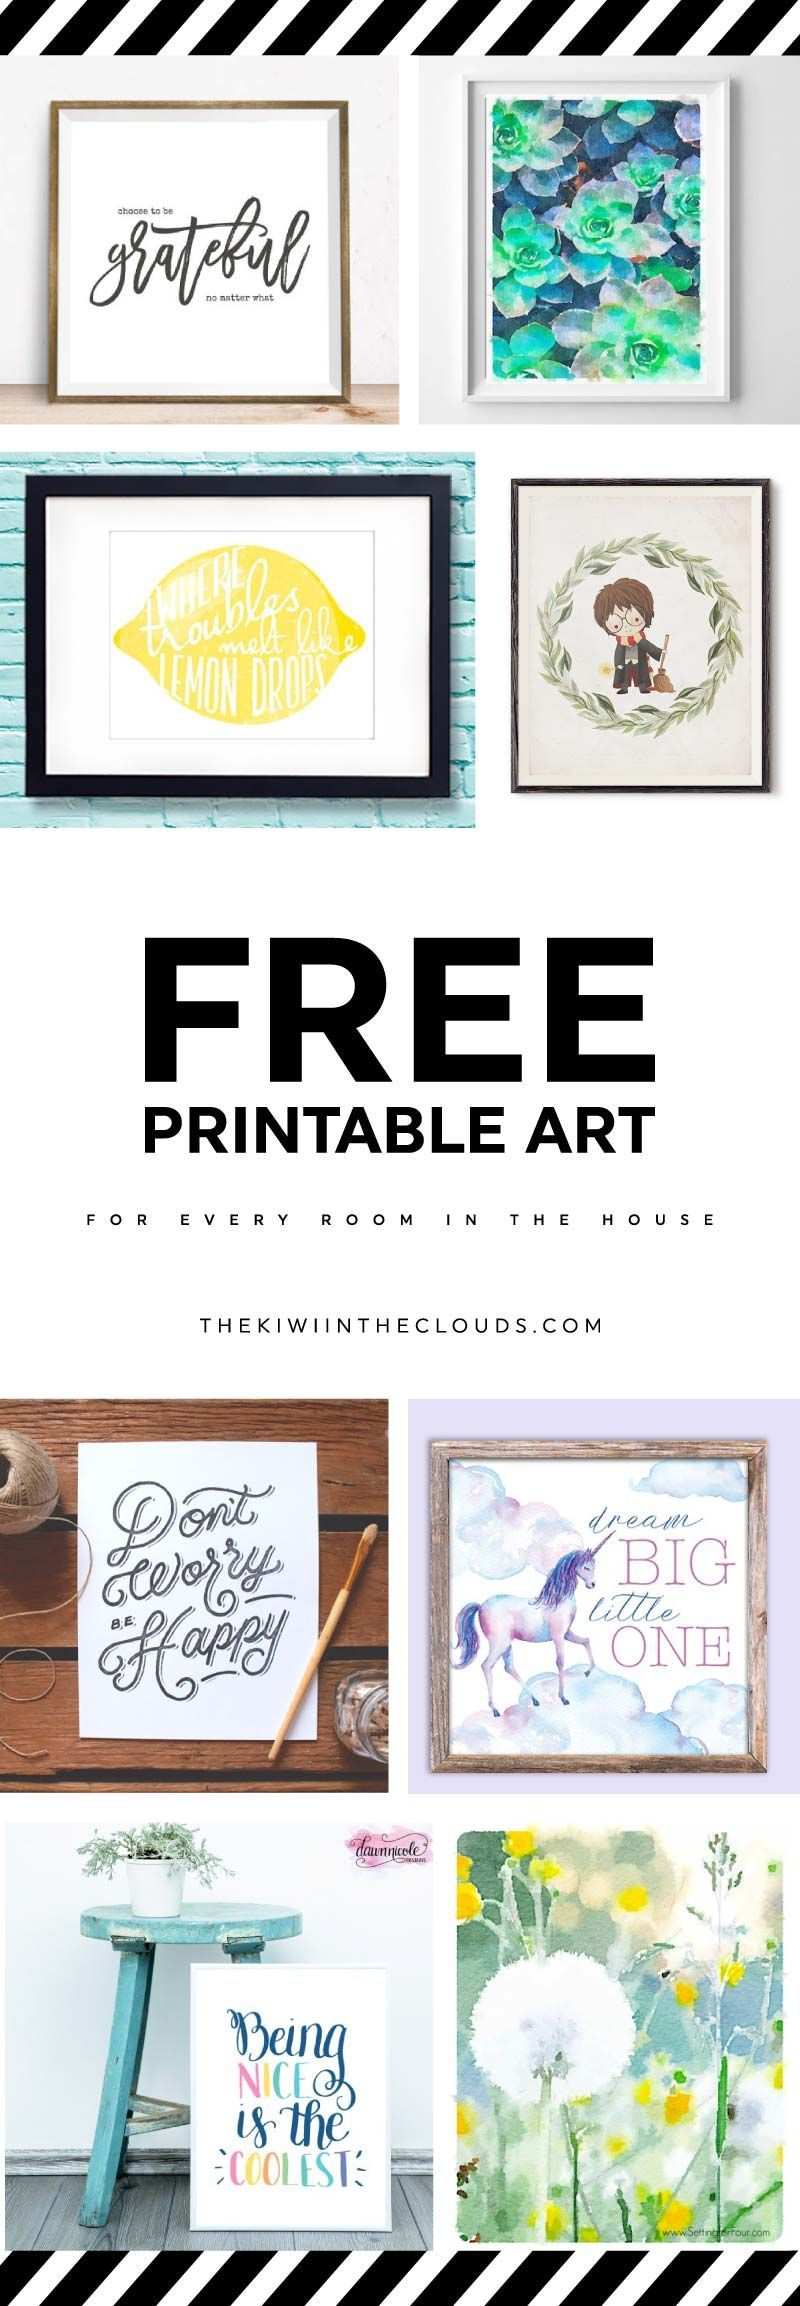 24 crafts room printables
 ideas